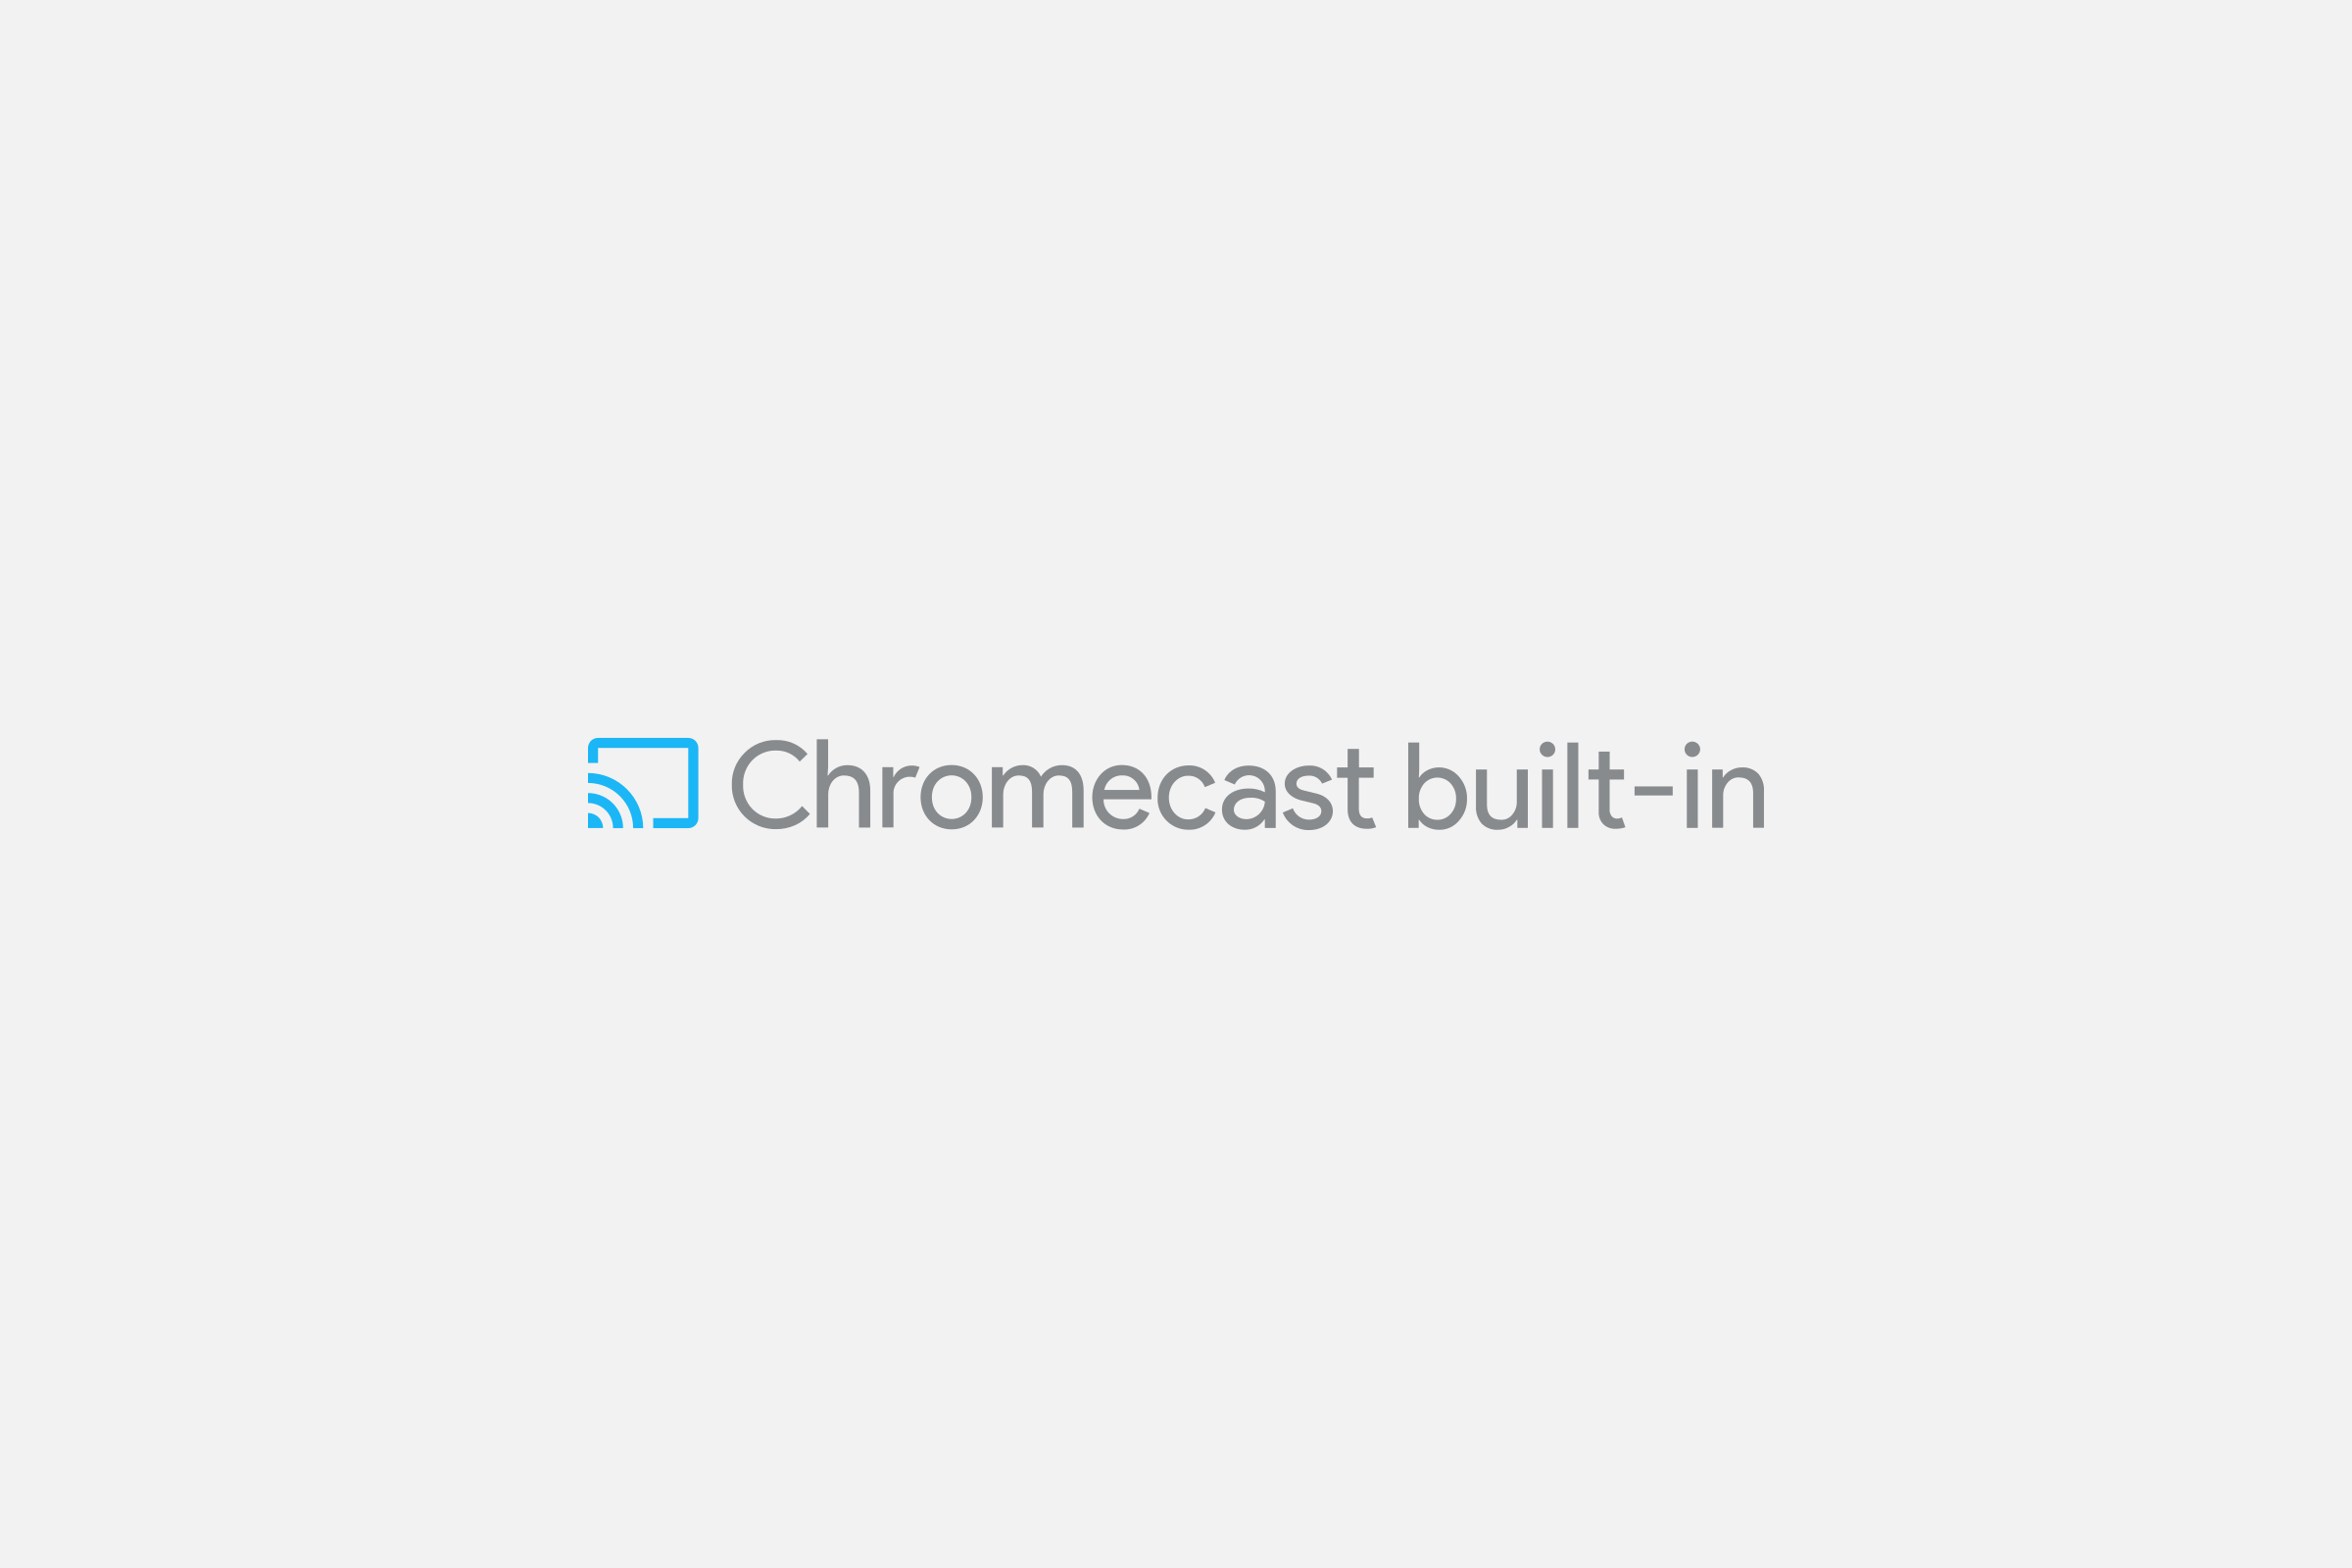 Chromecast built-in 対応 TV にキャストしたくない：機能を無効にする方法